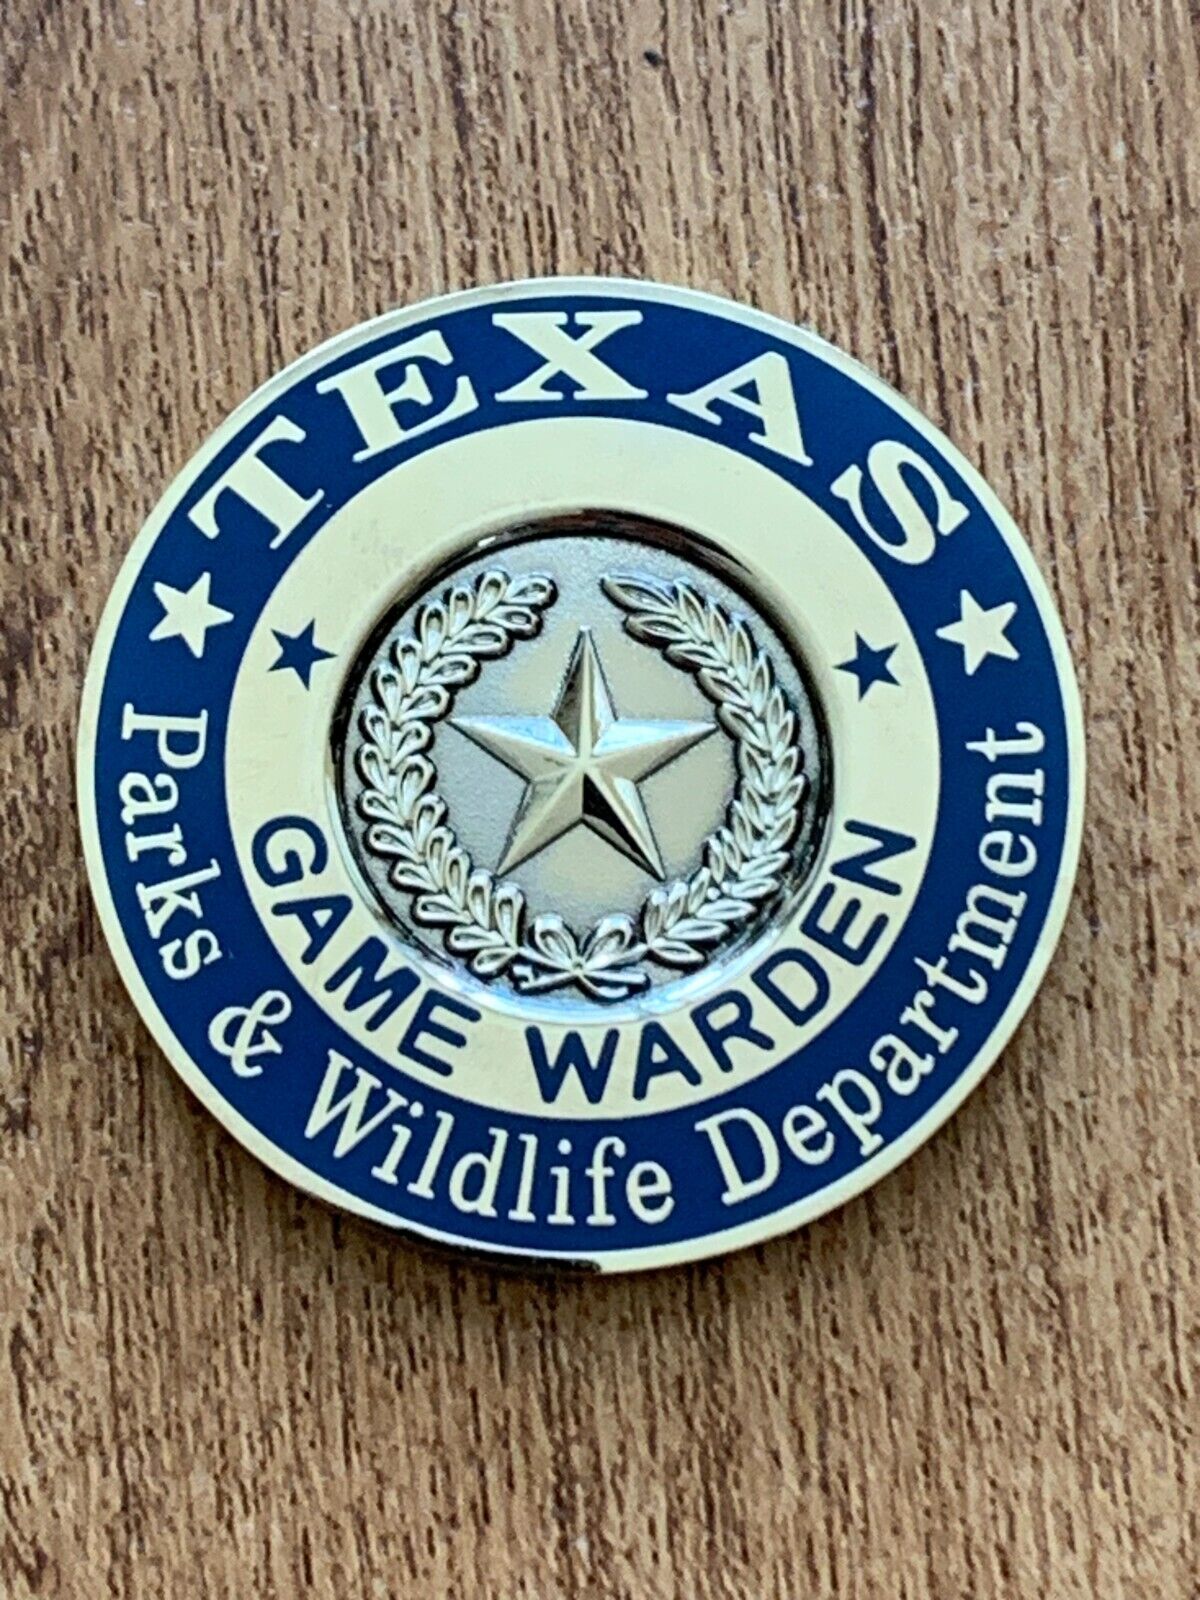 E77 Texas Game Warden Parks & Wildlife Department Silver Color Challenge Coin